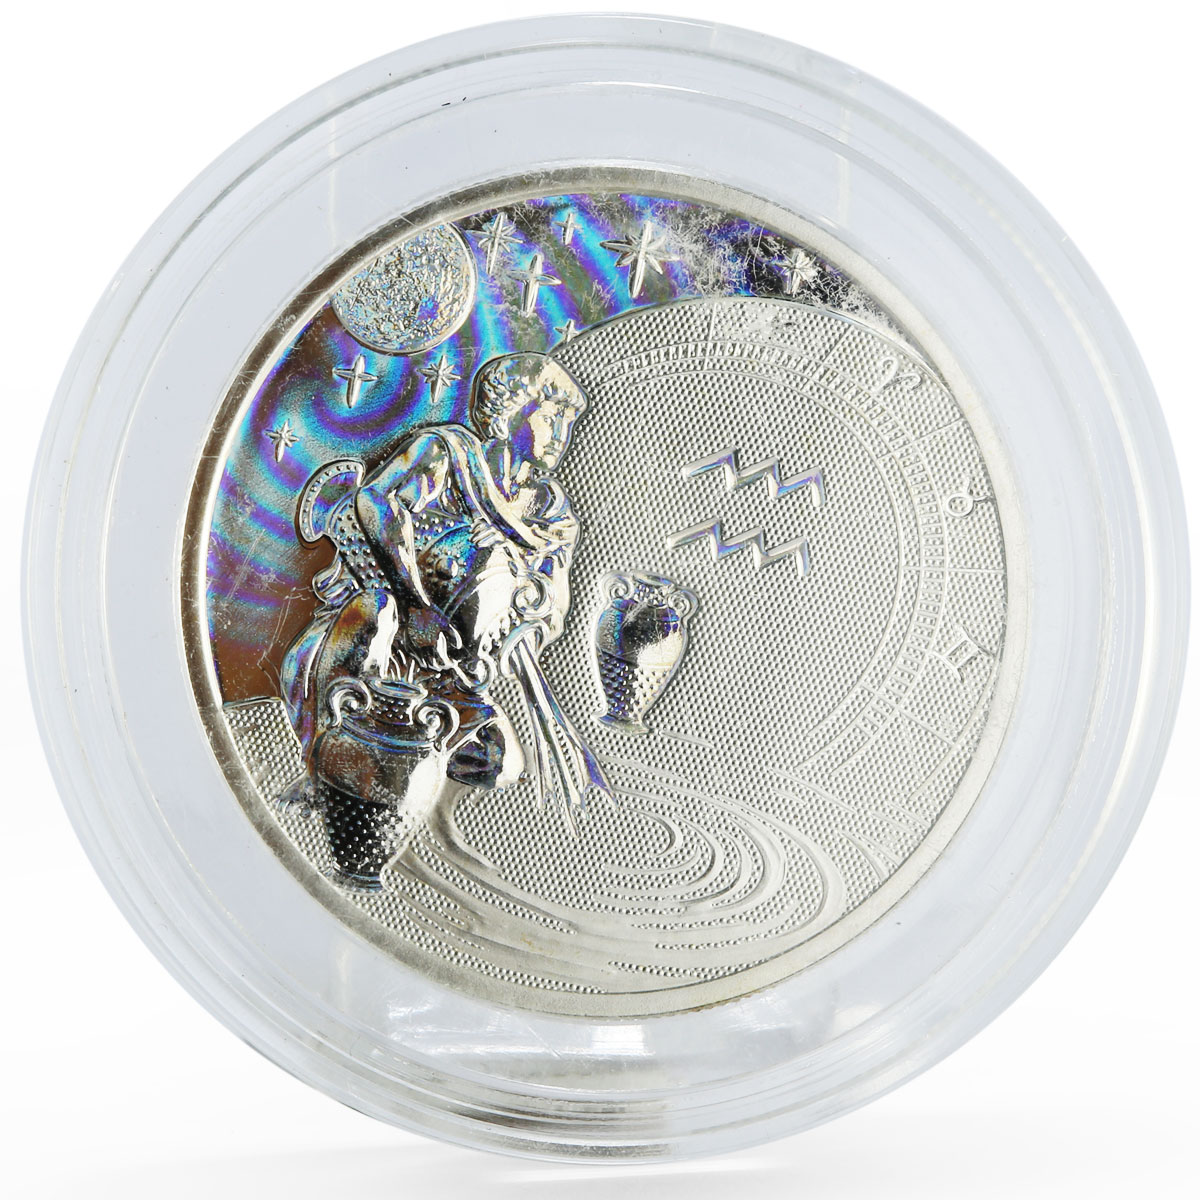 Cameroon 500 francs Zodiac Signs series Aquarius hologram silver coin 2010